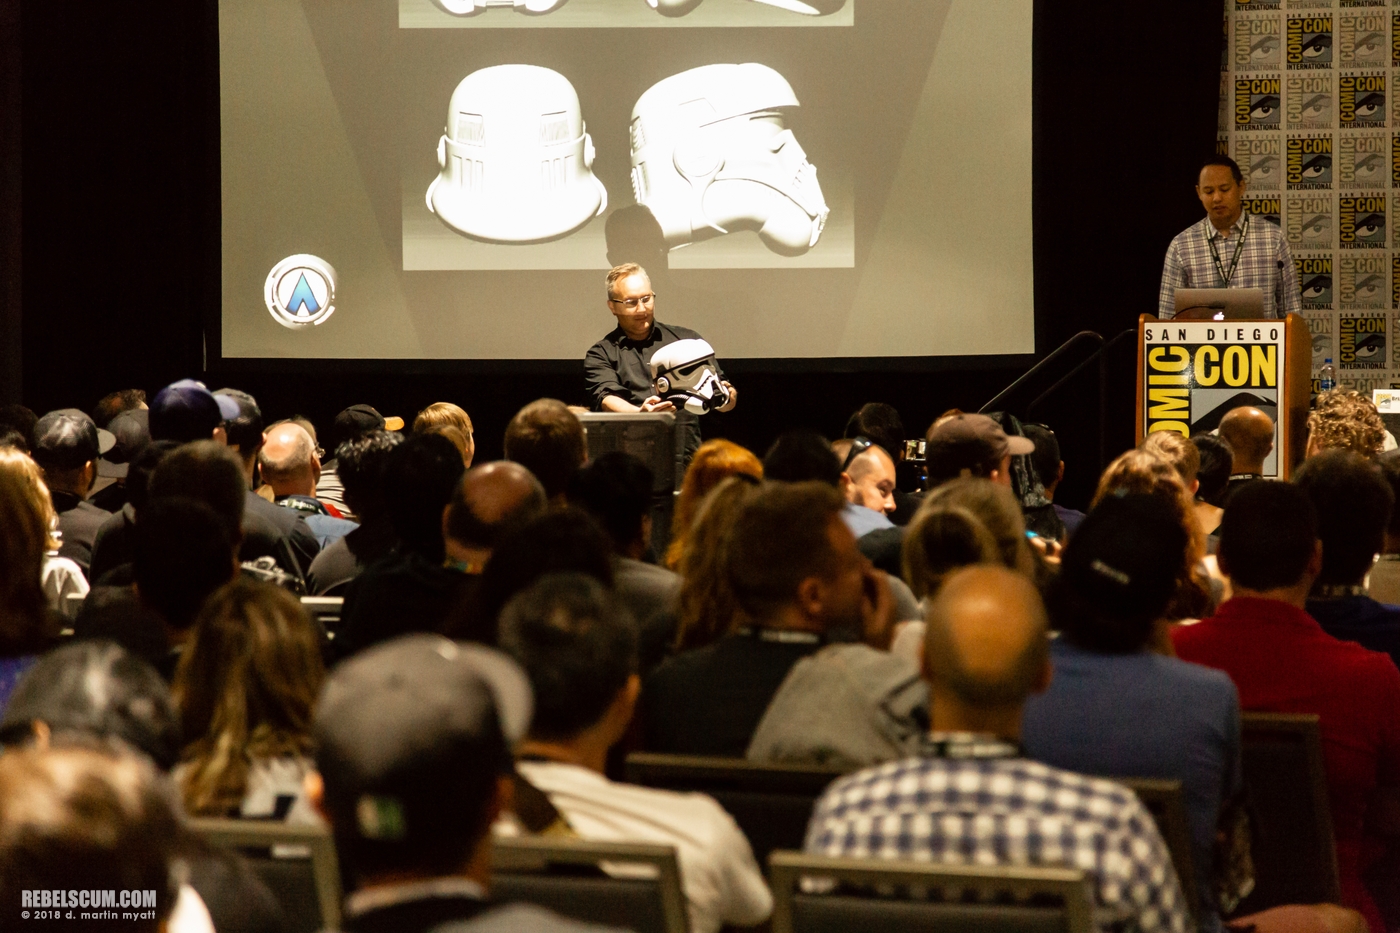 Star-Wars-Collectibles-Panel-2018-San-Diego-Comic-Con-065.jpg